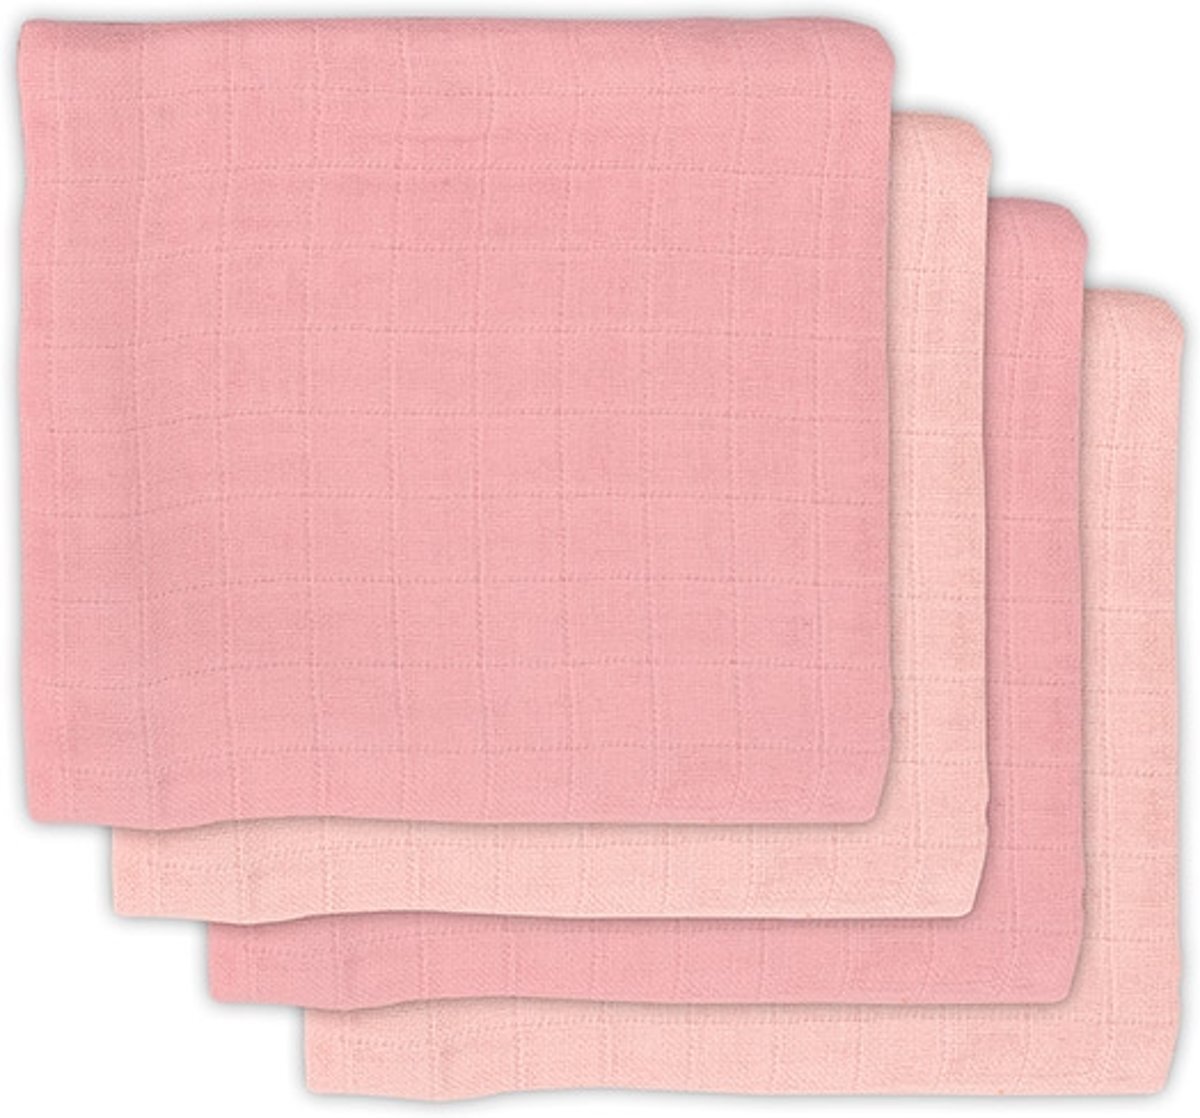 Jollein Hydrofiele doek Bamboe 4 stuks Pale pink 70x70cm roze